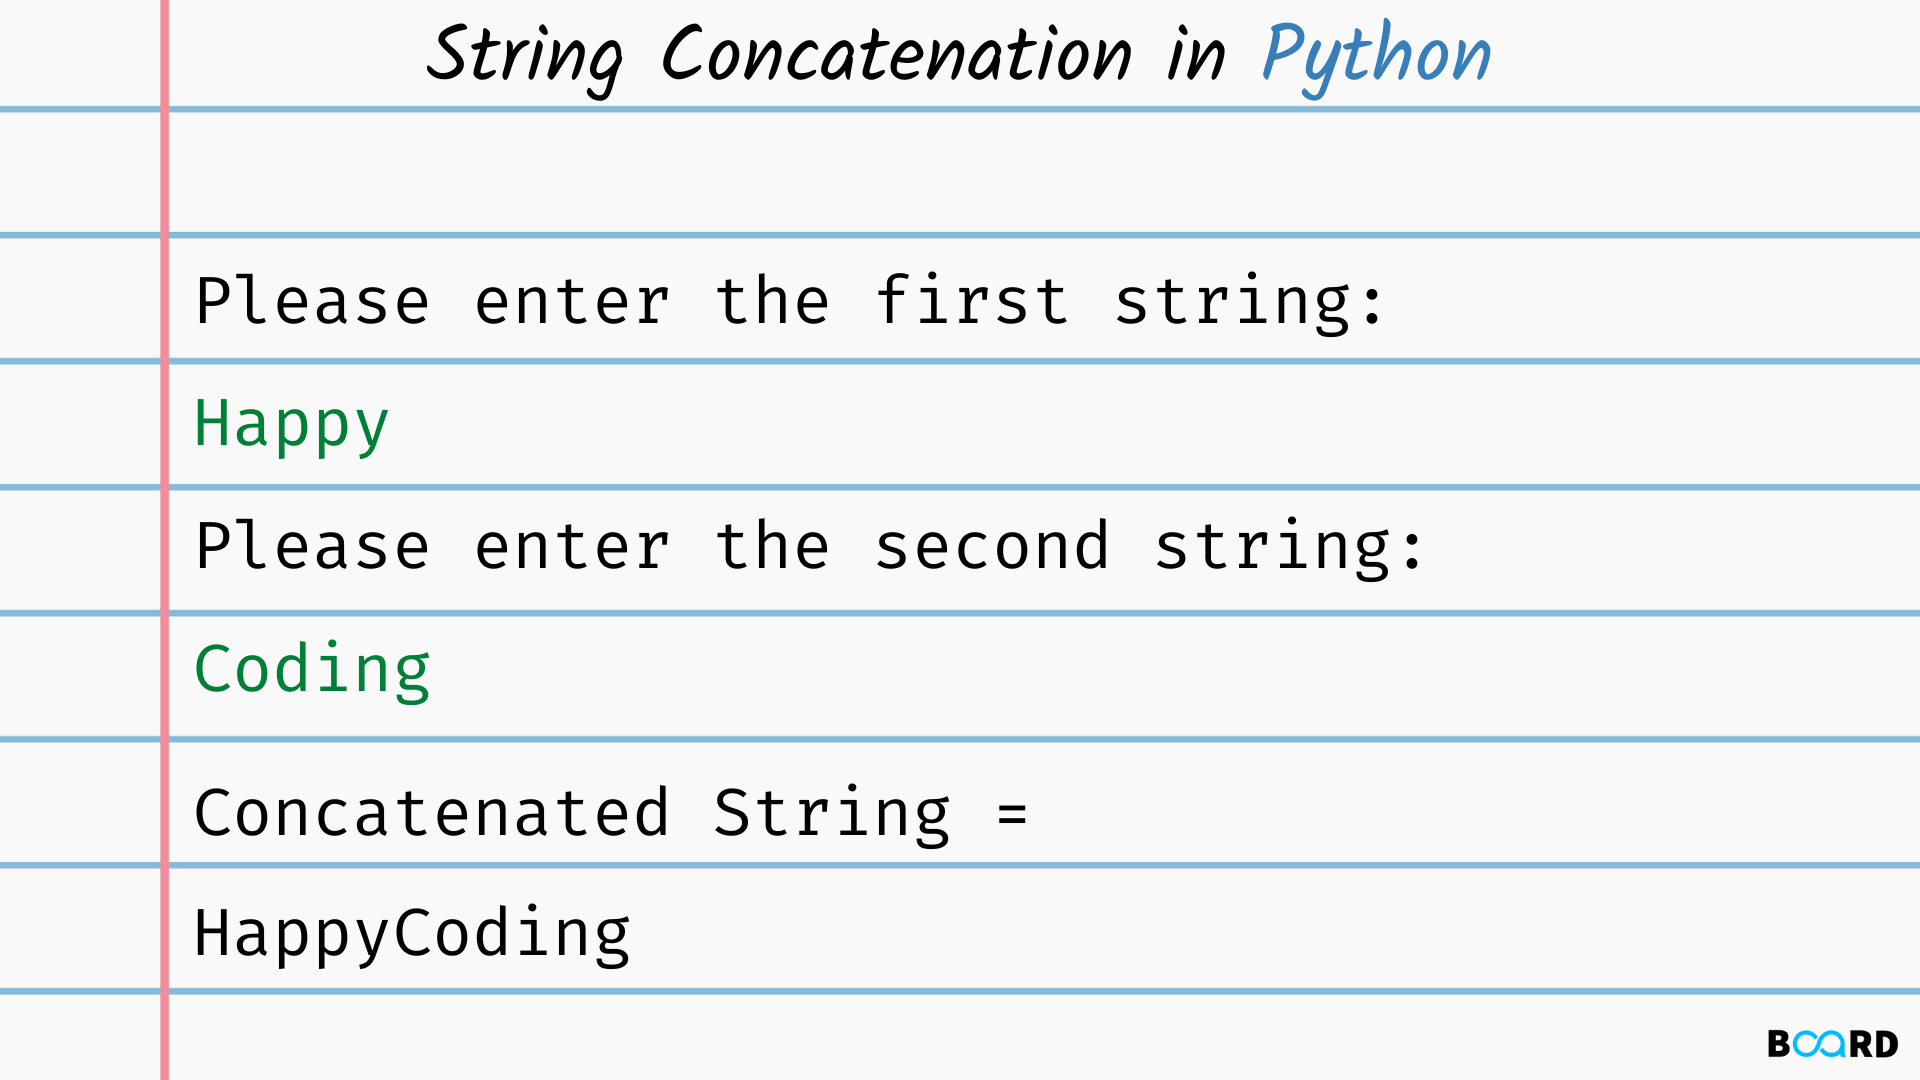 String Concatenation in Python